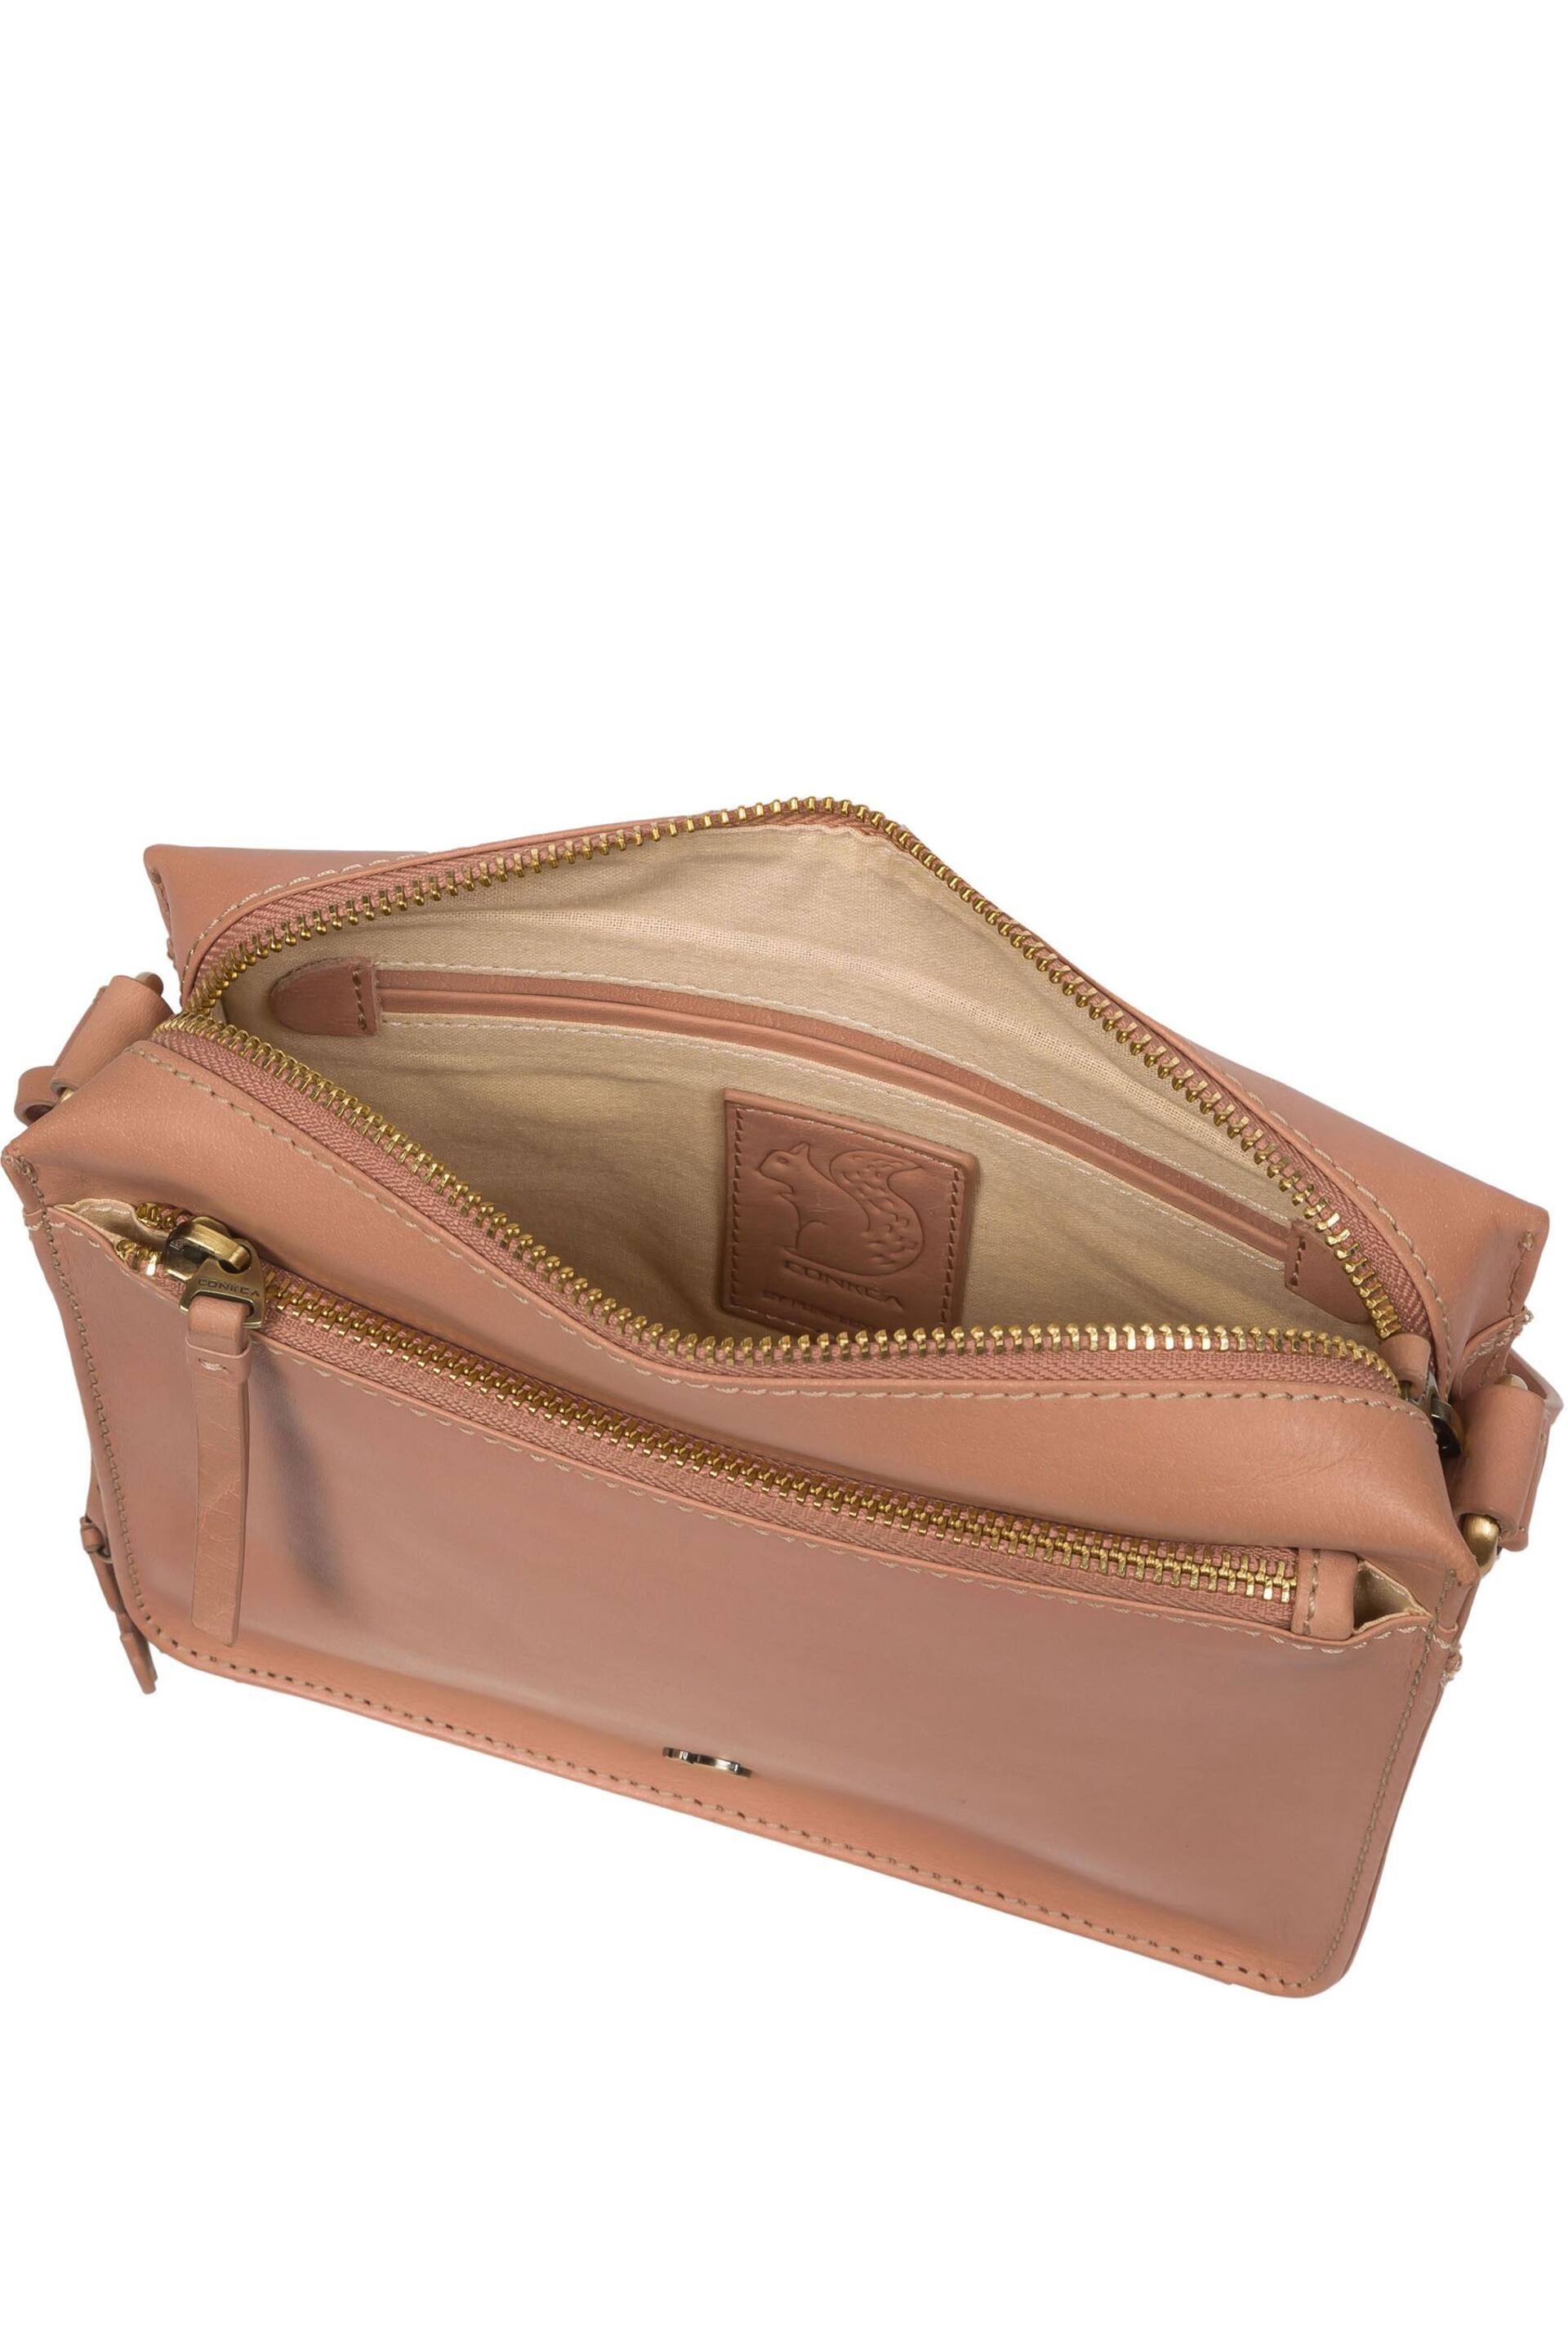 Conkca Aurora Leather Cross Body Bag - Image 4 of 6